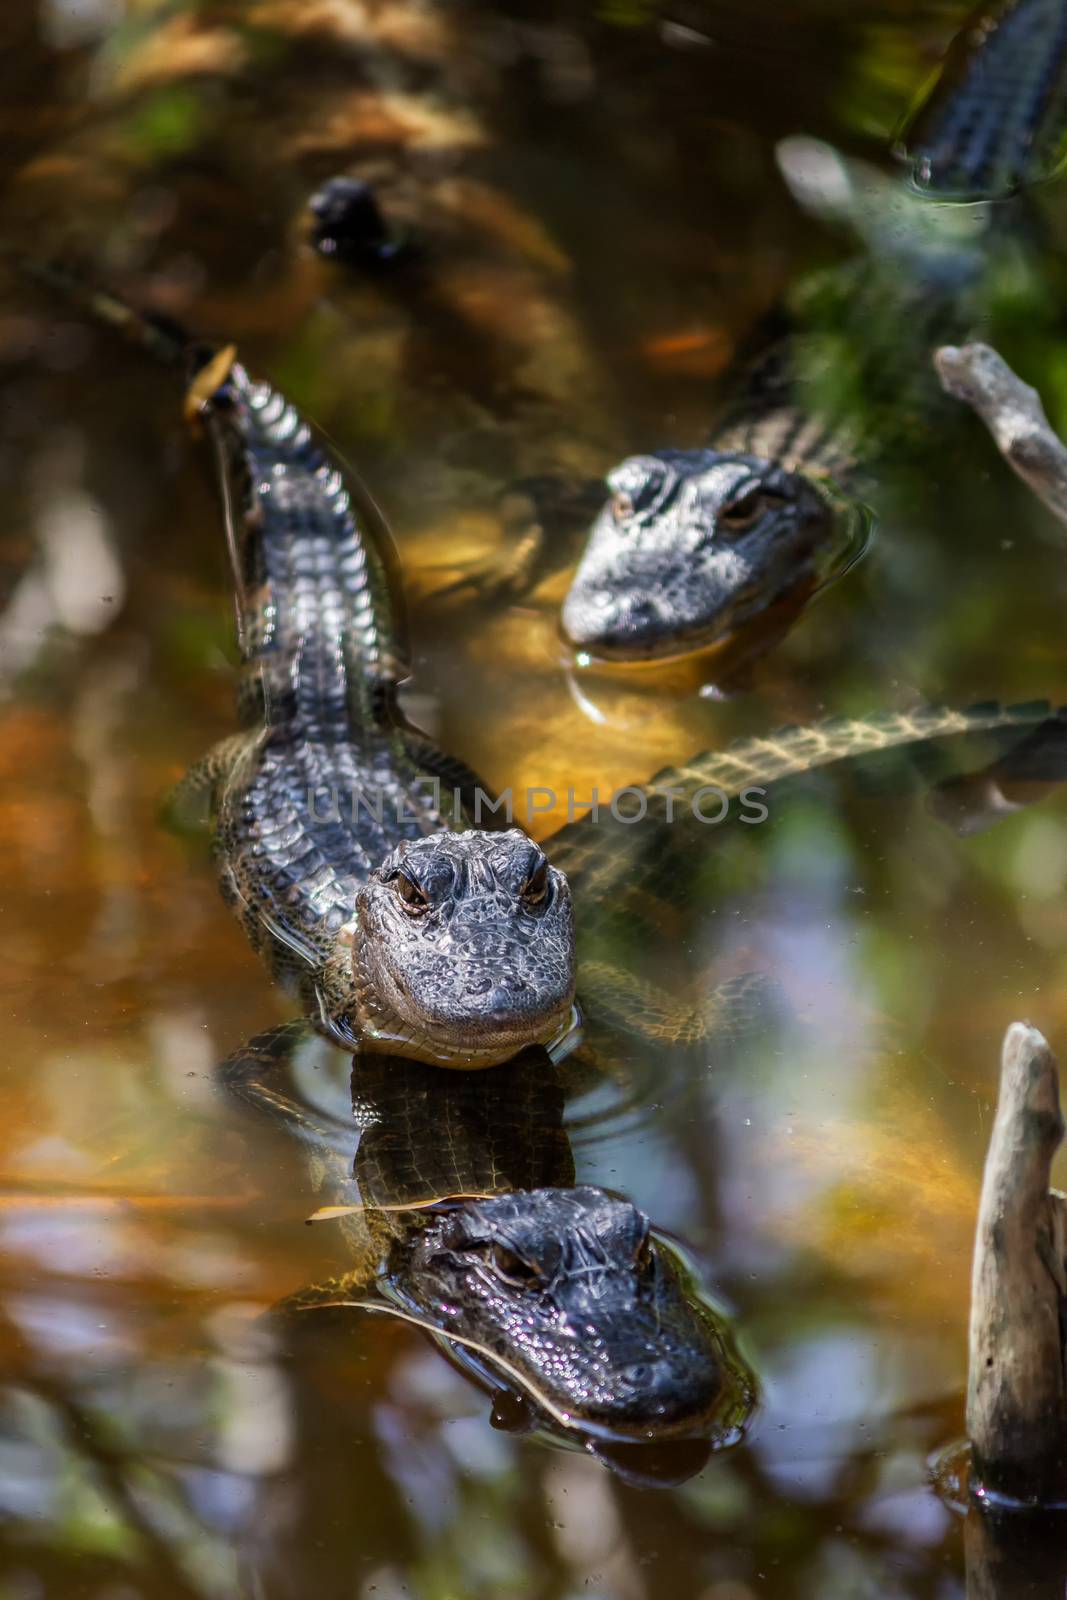 Wild Aligators in a Florida Mangrove Swamp by backyard_photography